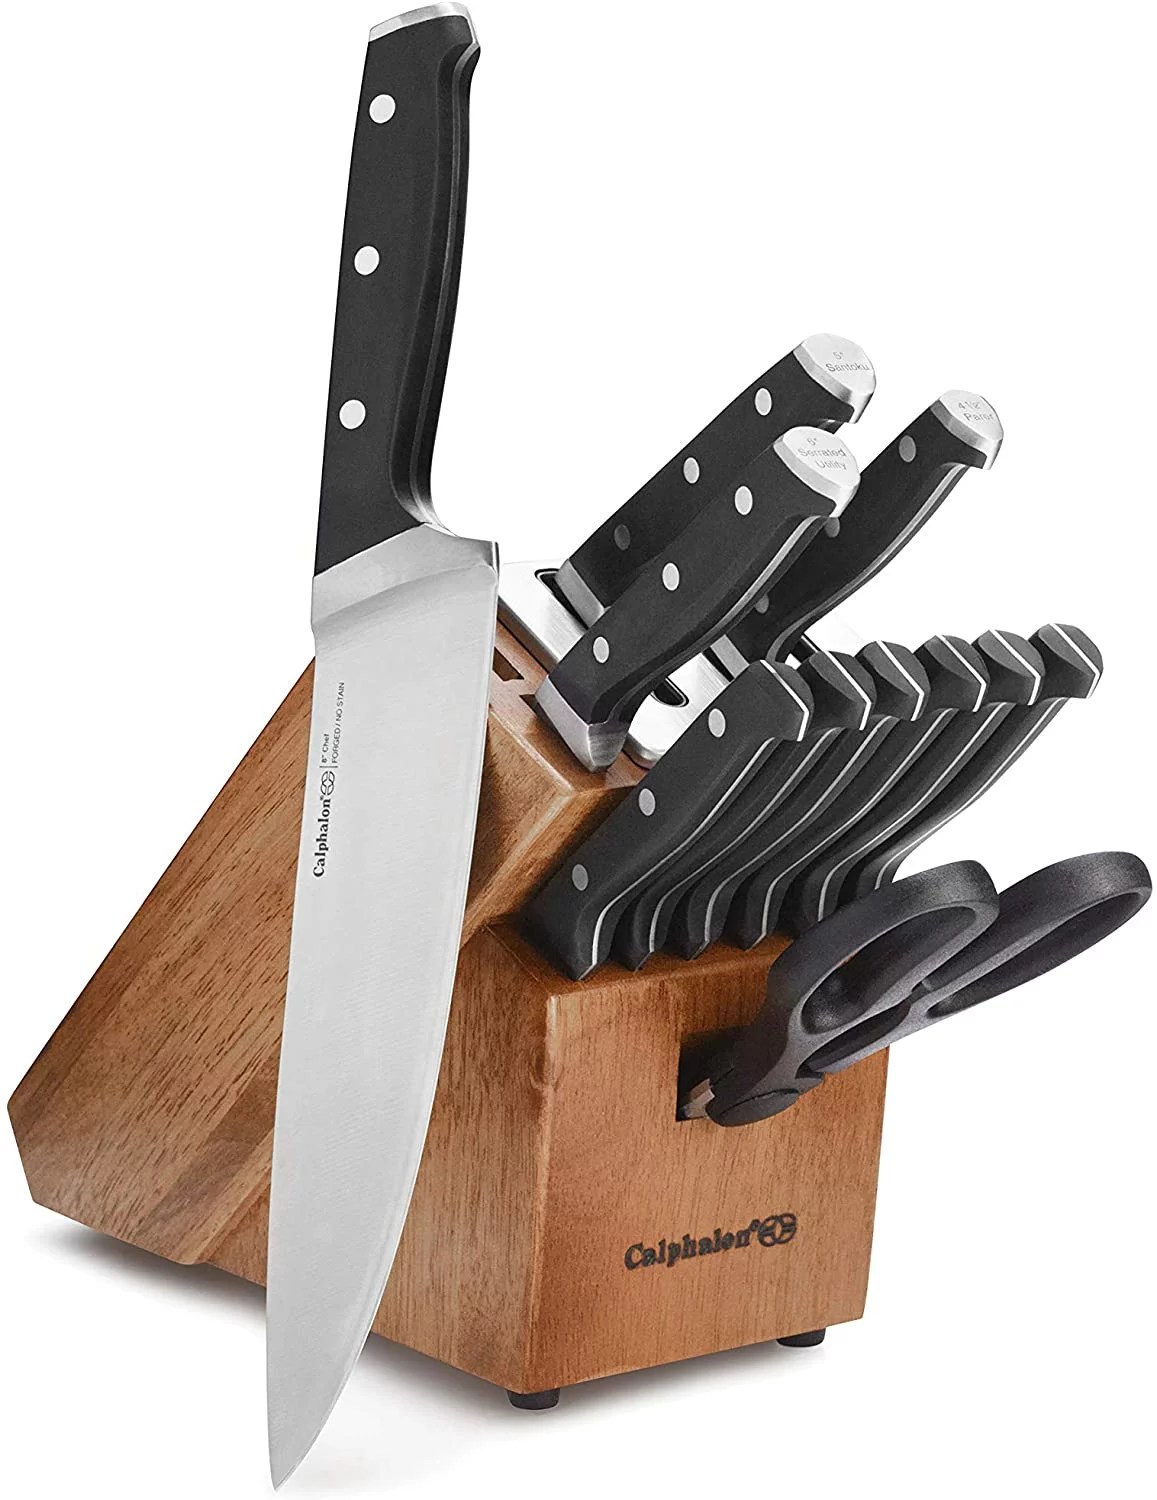 Calphalon self sharpening knife set